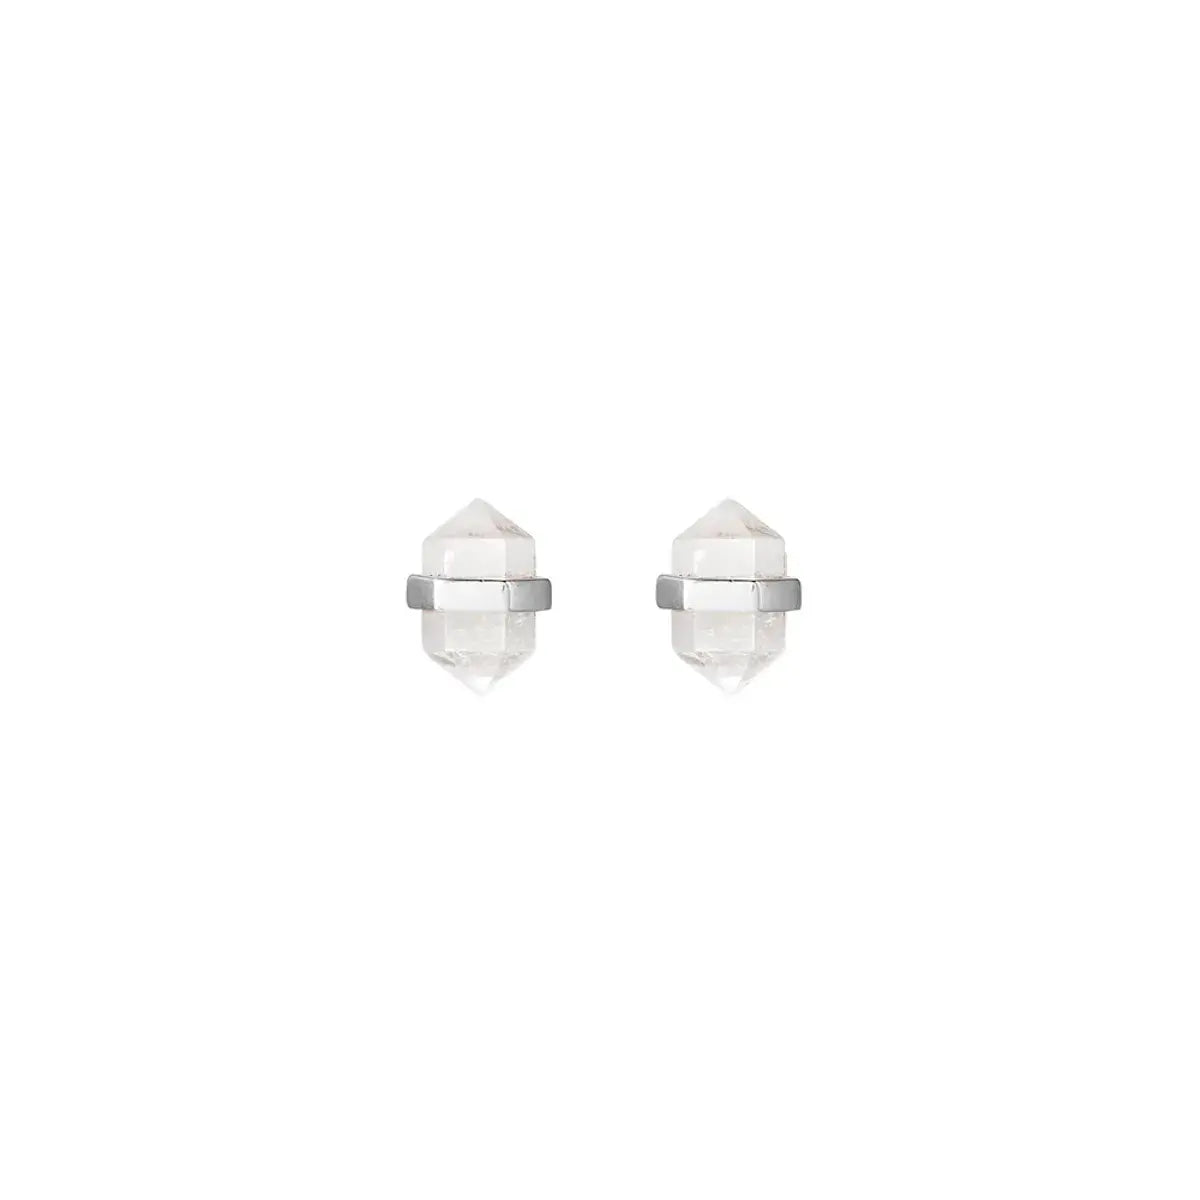 Beaming Crystal Stud Earrings by Krystle Knight Jewellery - Clear Quartz (Silver) 